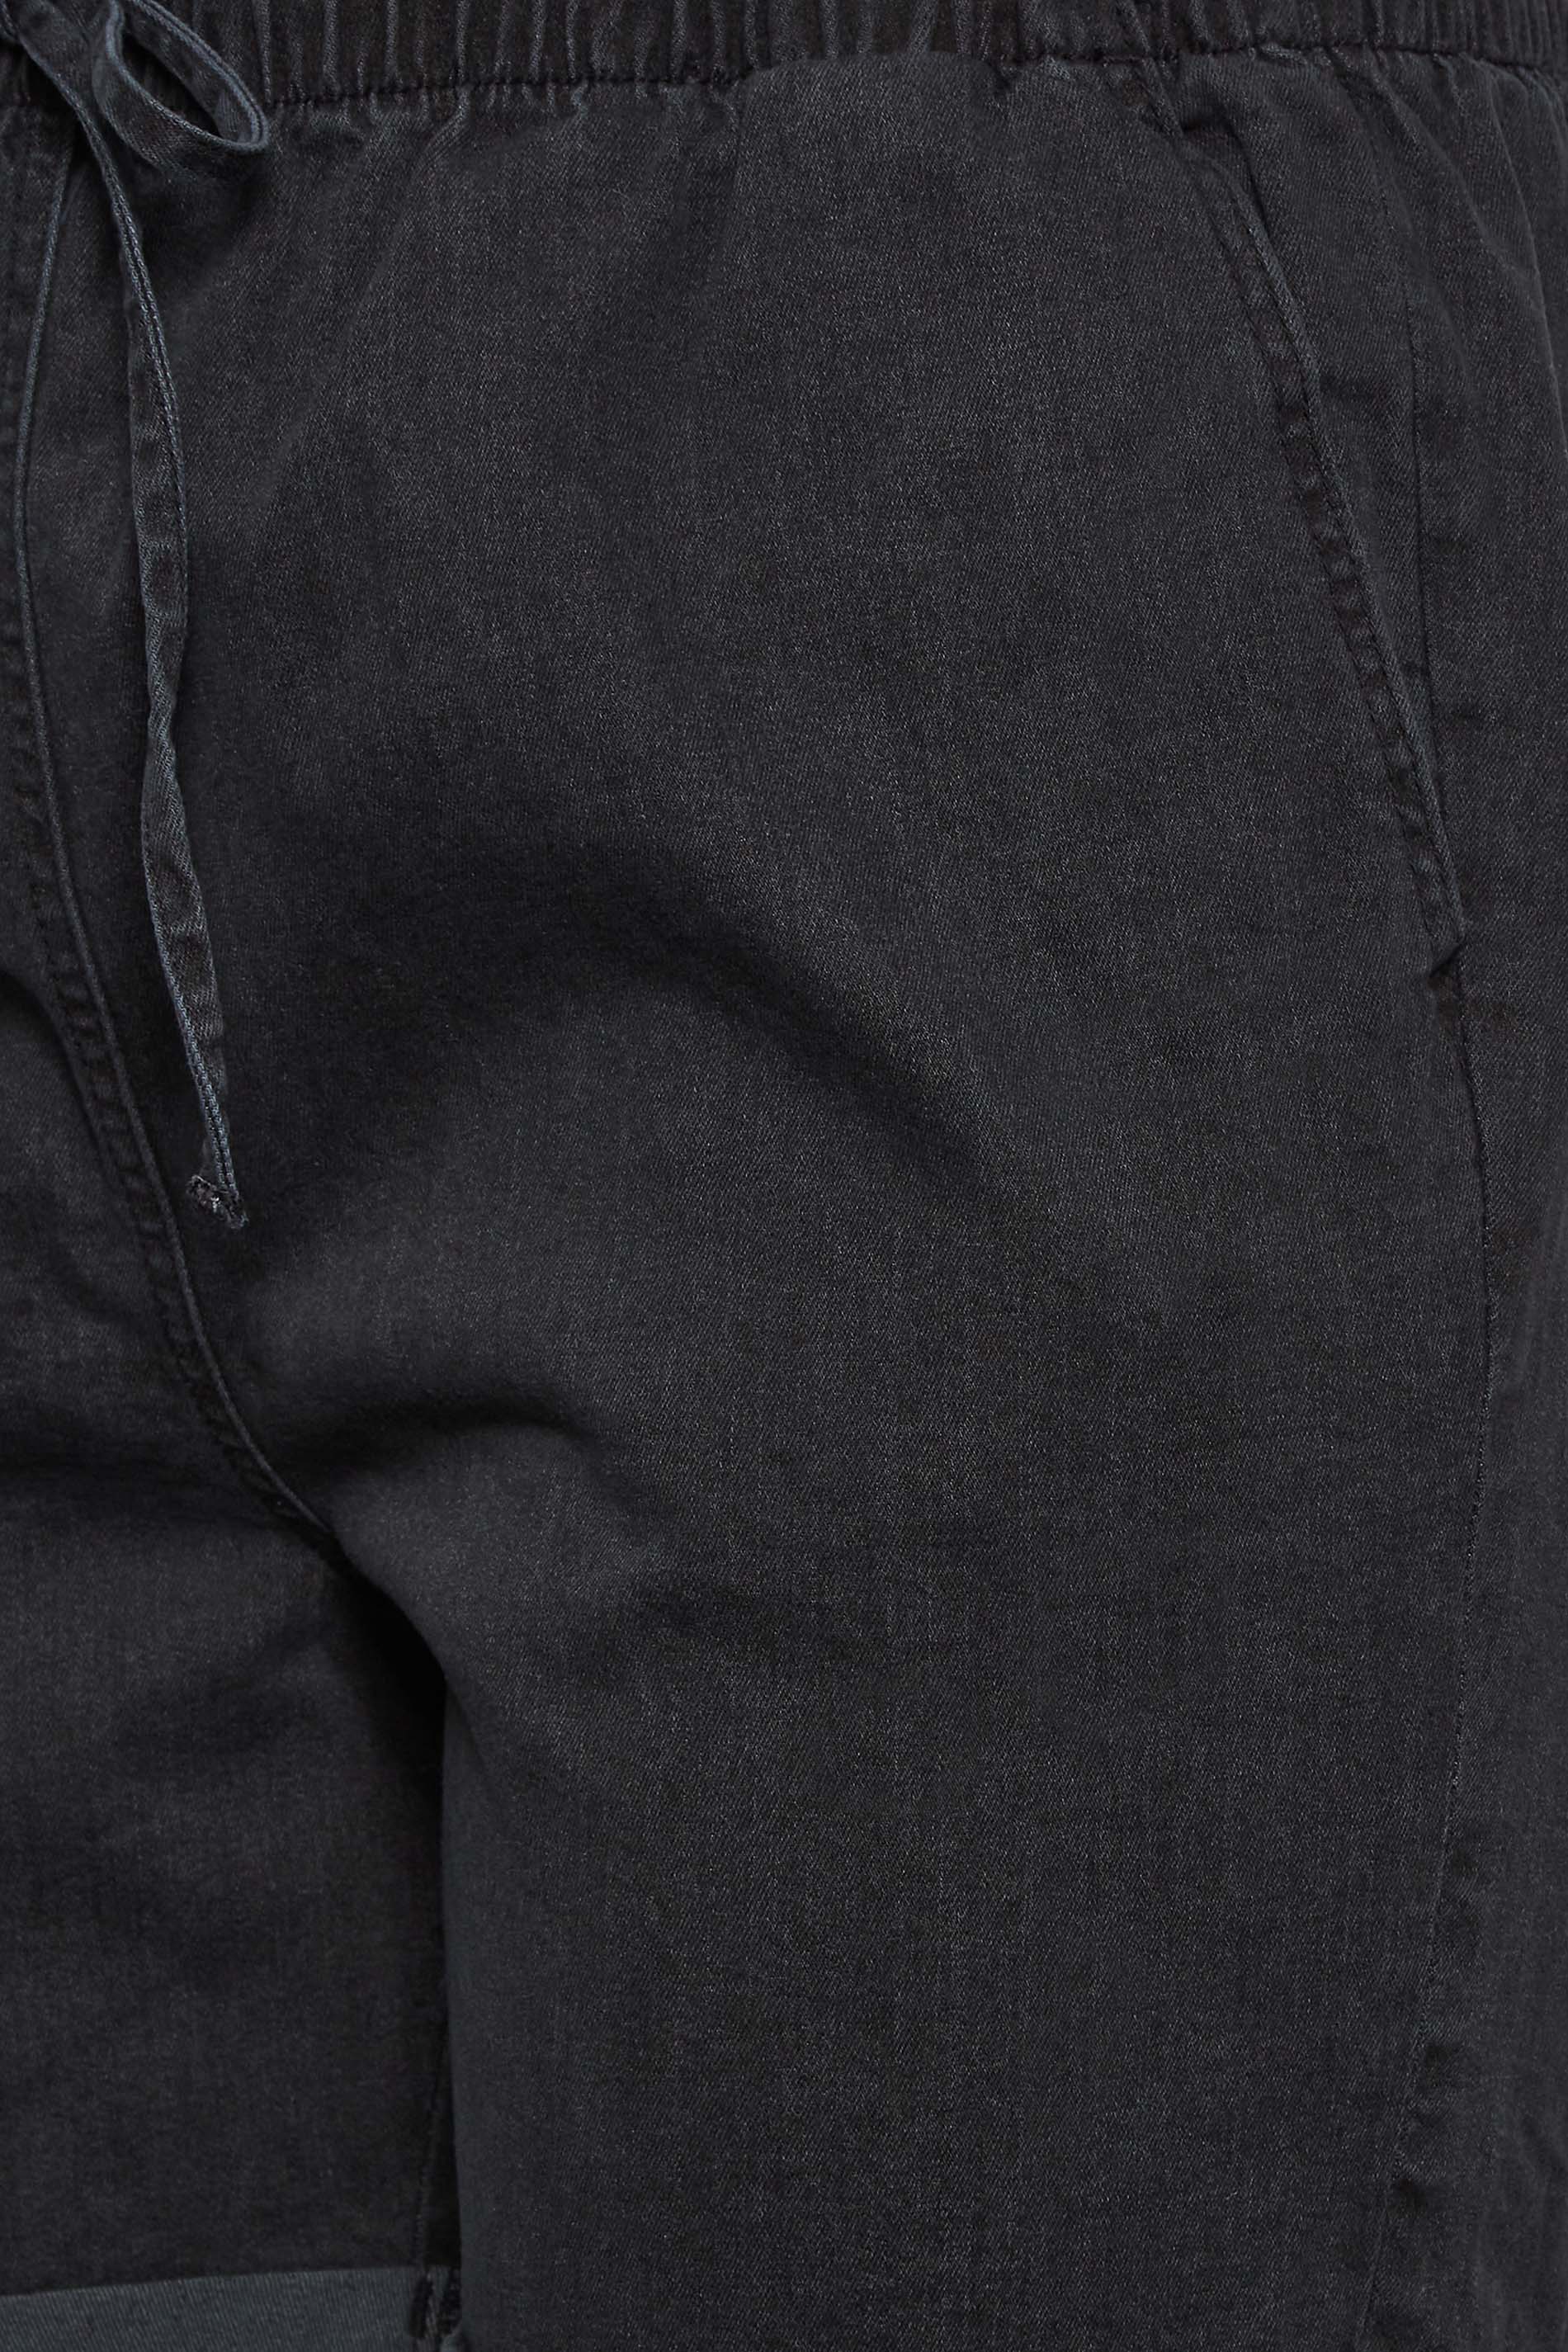 YOURS Plus Size Black Paperbag Drawstring Denim Mom Shorts | Yours Clothing 3